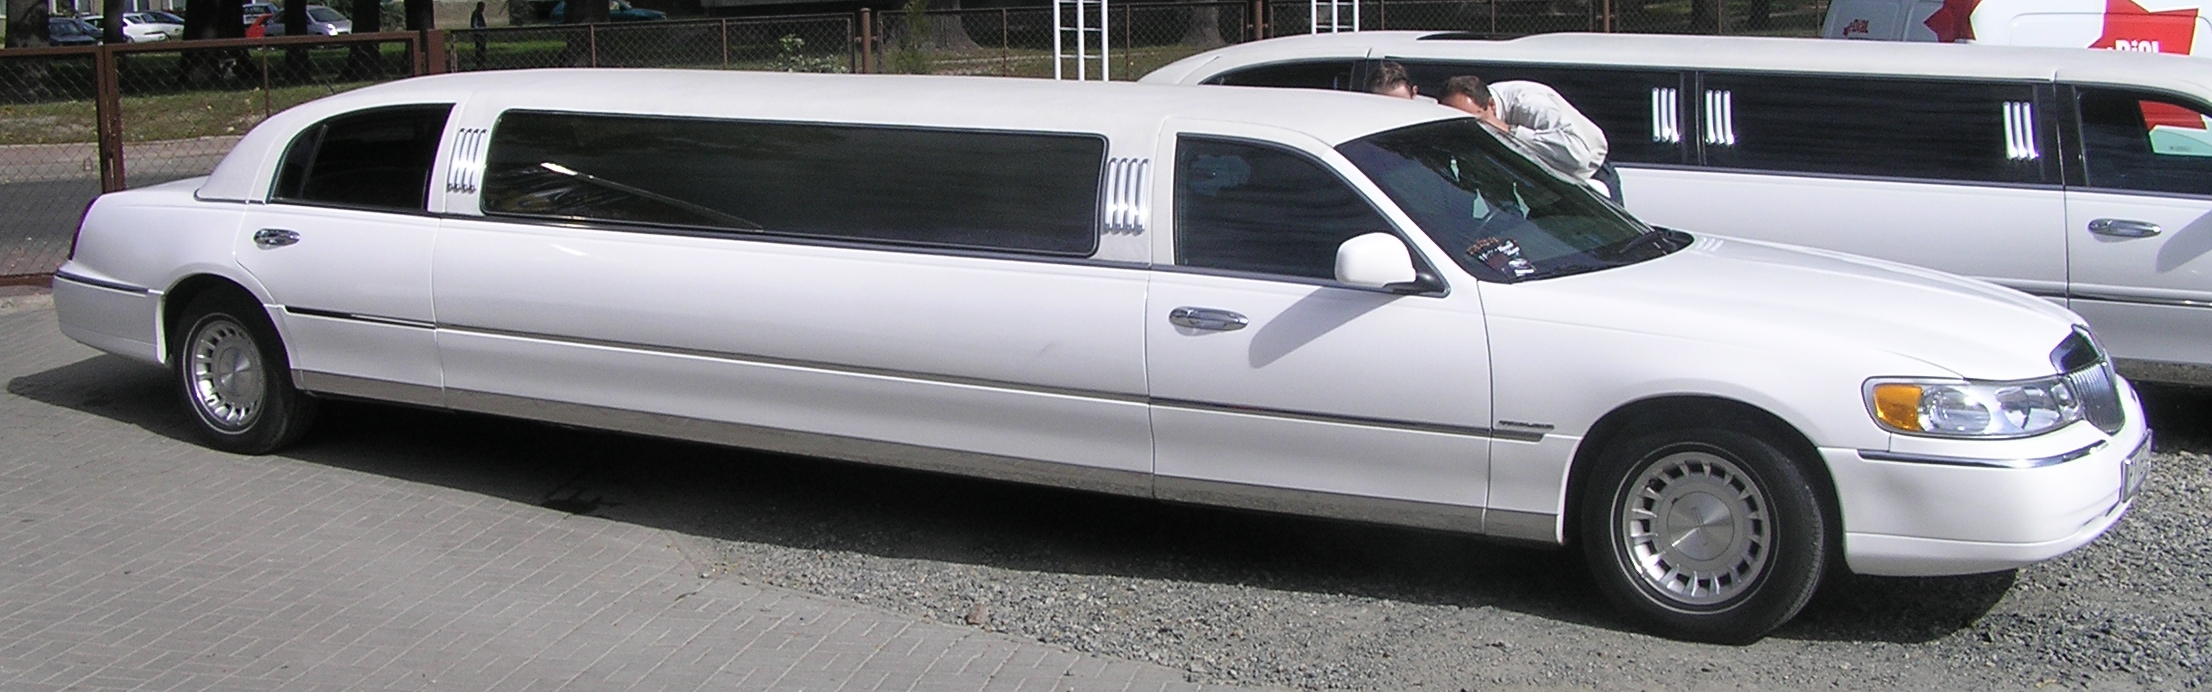 Lincoln Limousine: 11 фото